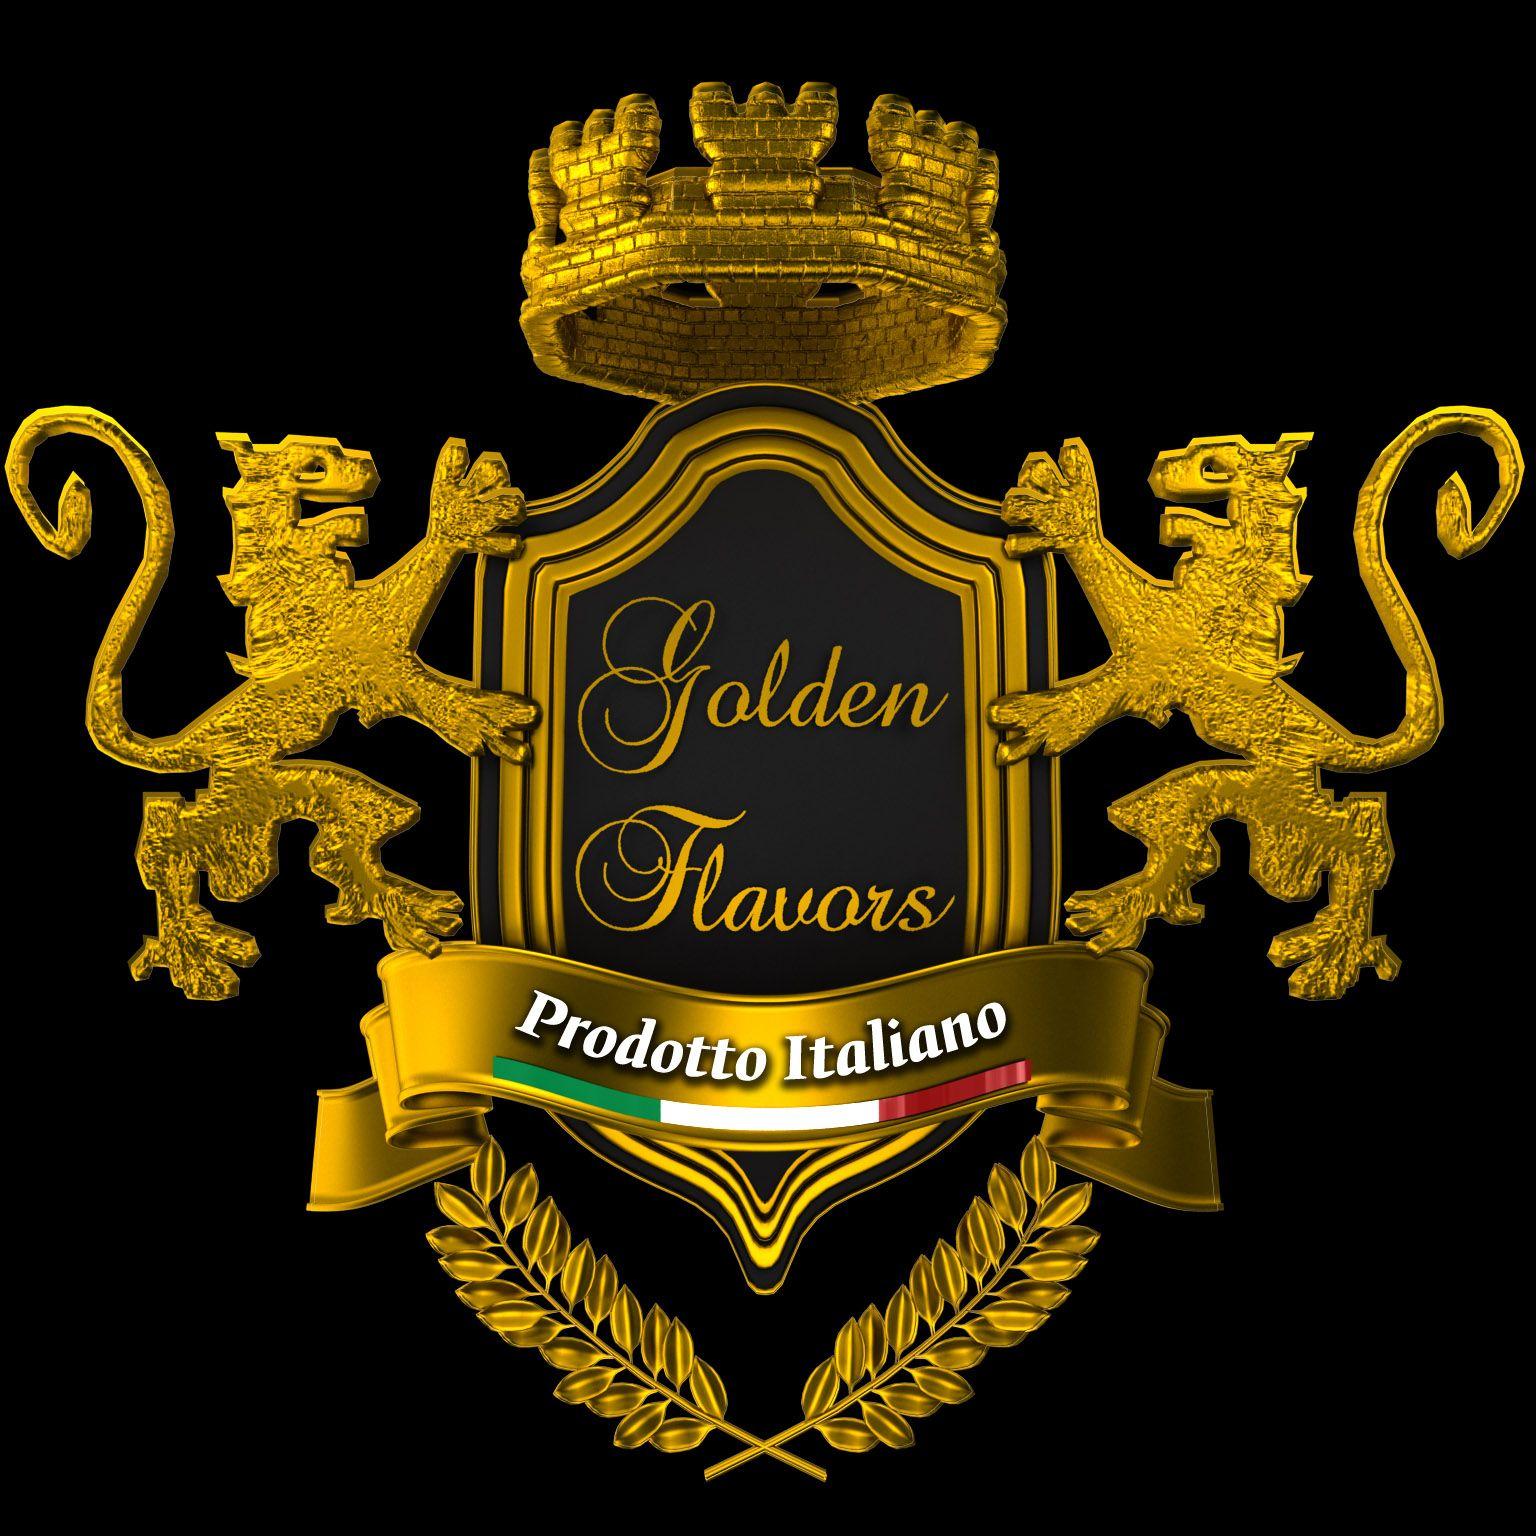 Golden Logo - Gallery: Logos: logo golden flavors 3D